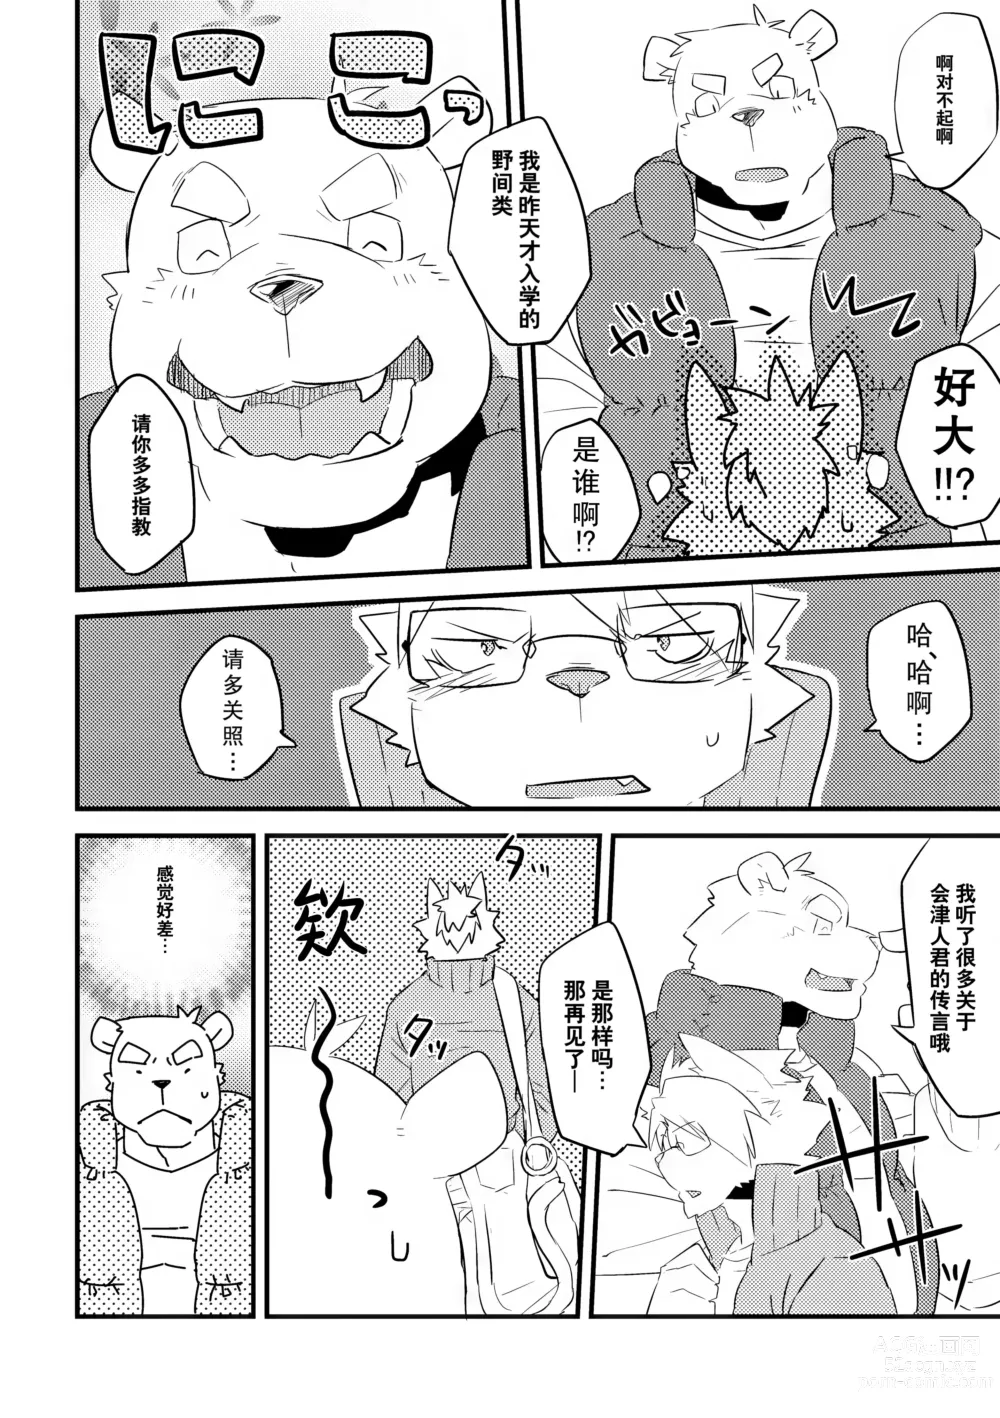 Page 5 of doujinshi 右手的恋人